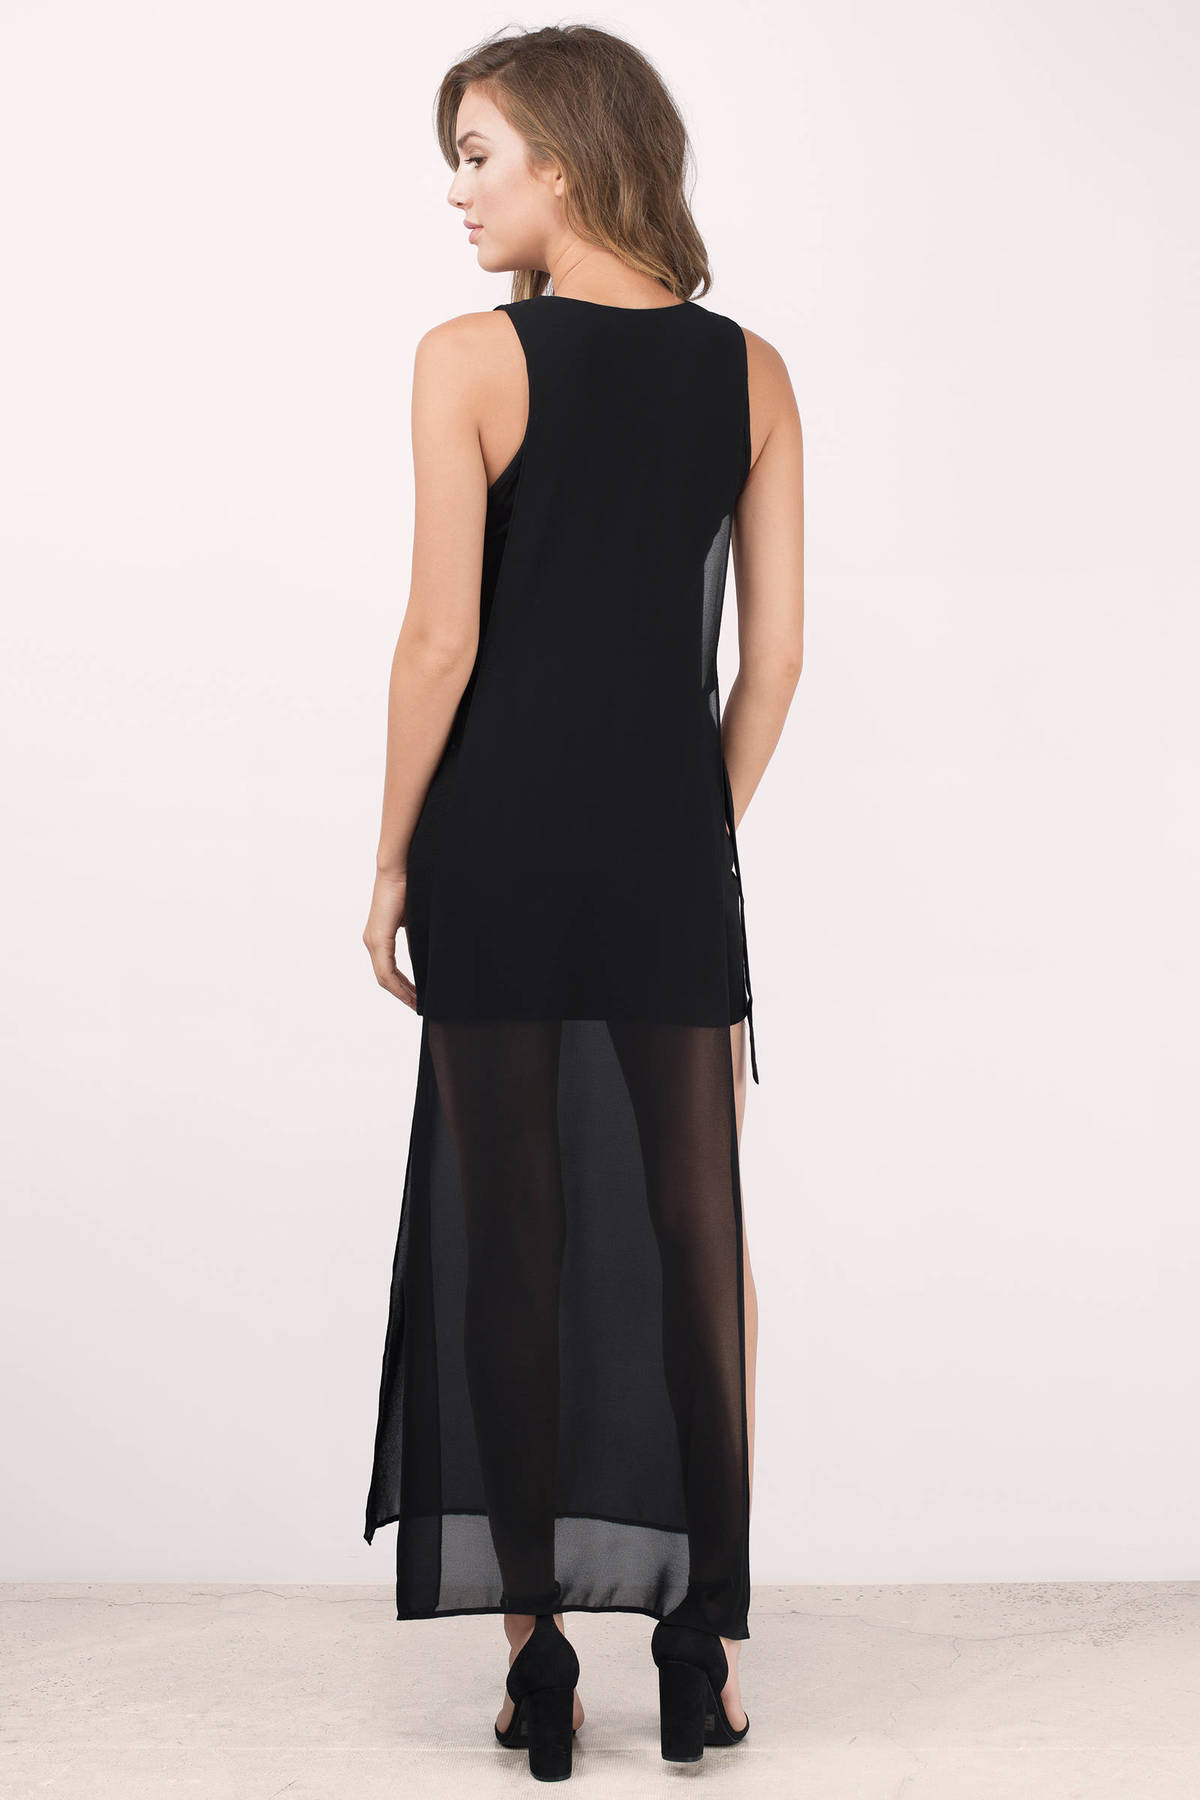 Trendy Black Maxi Dress - Sleeveless Dress - Maxi Dress